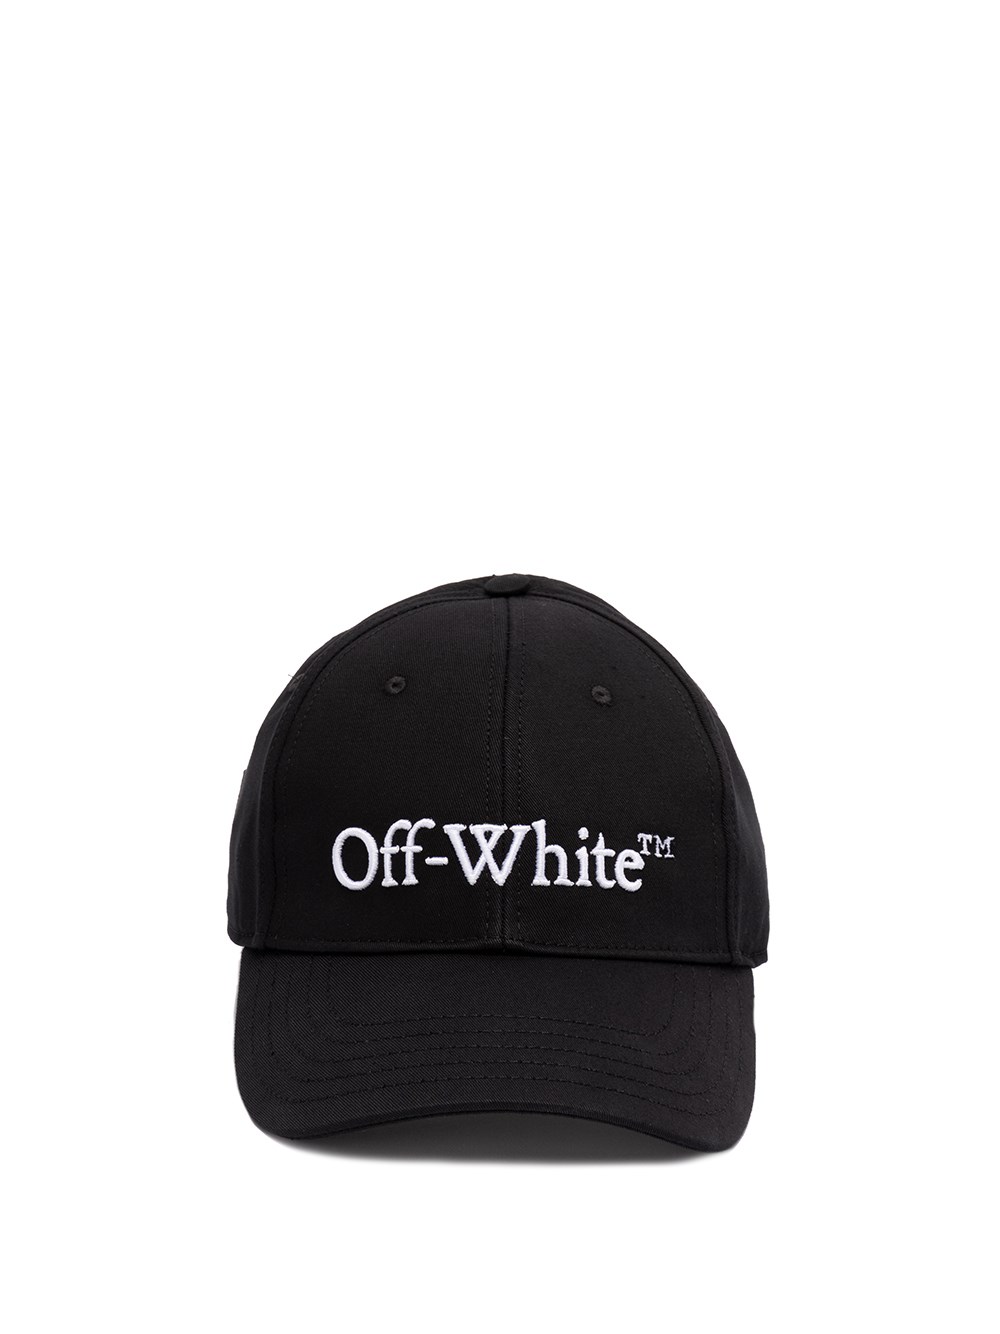 OFF-WHITE `BOOKISH DRIL` BASEBALL CAP